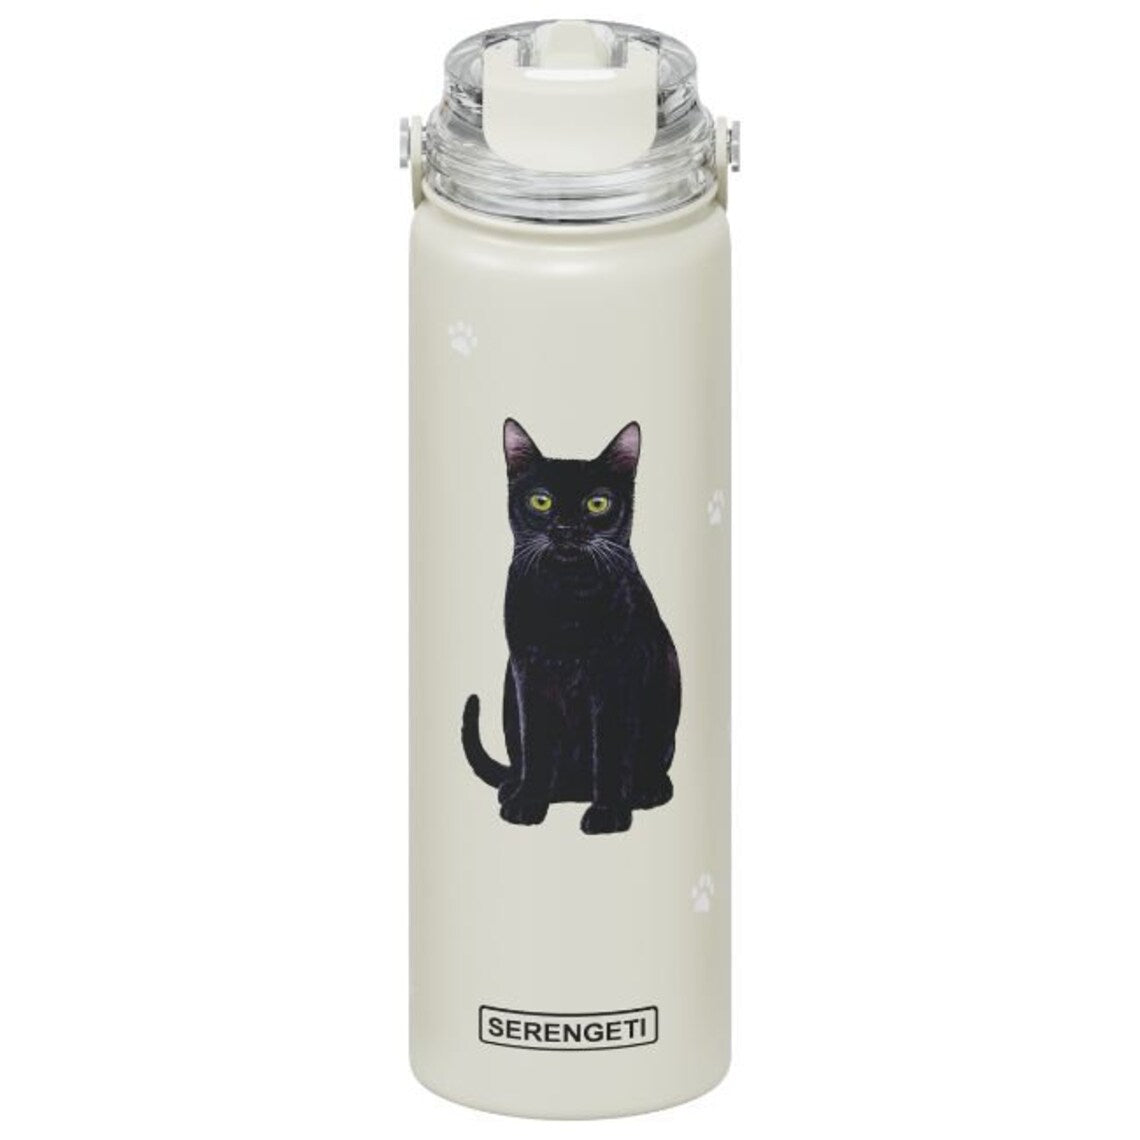 SERENGETI Stainless Steel Water Bottle 24oz - Black Cat